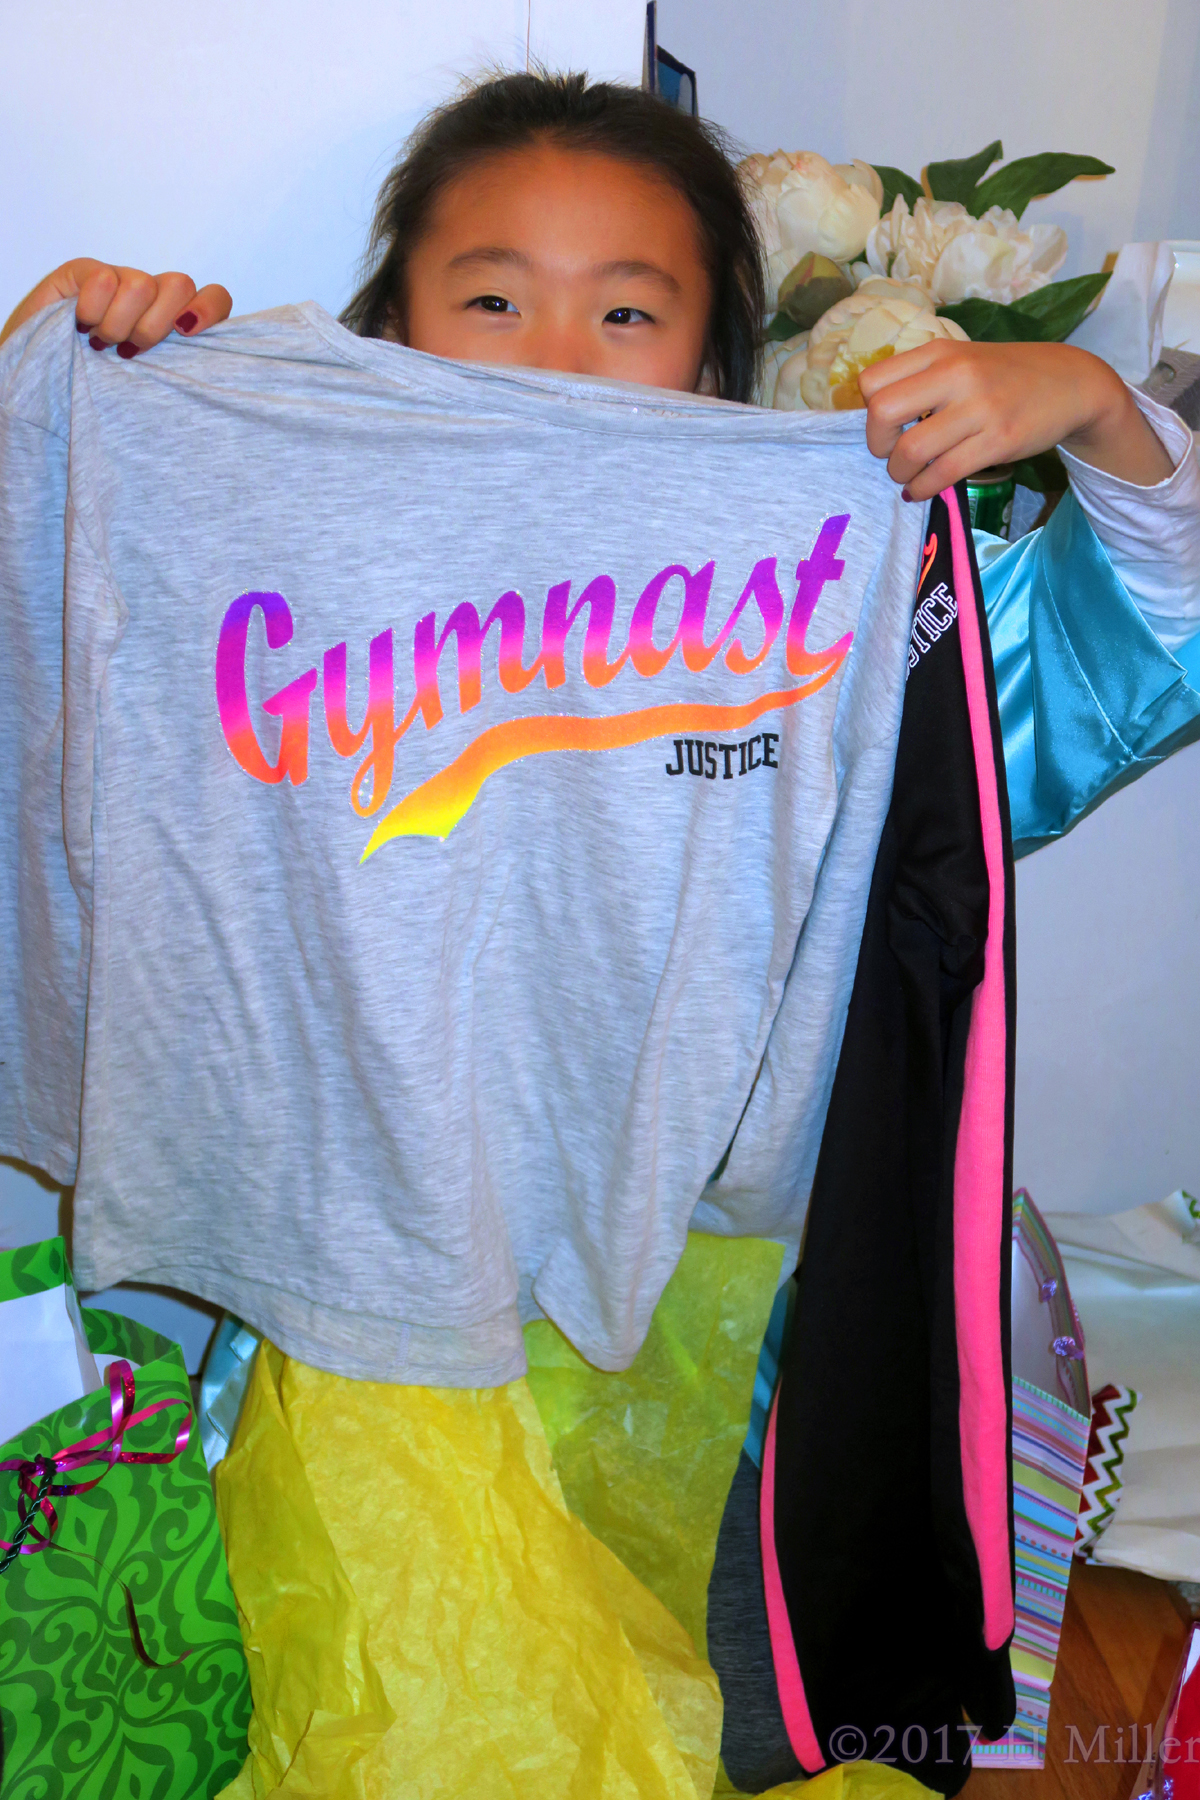 'Gymnast'! The T Shirt Tagline Is Pretty Cool! 